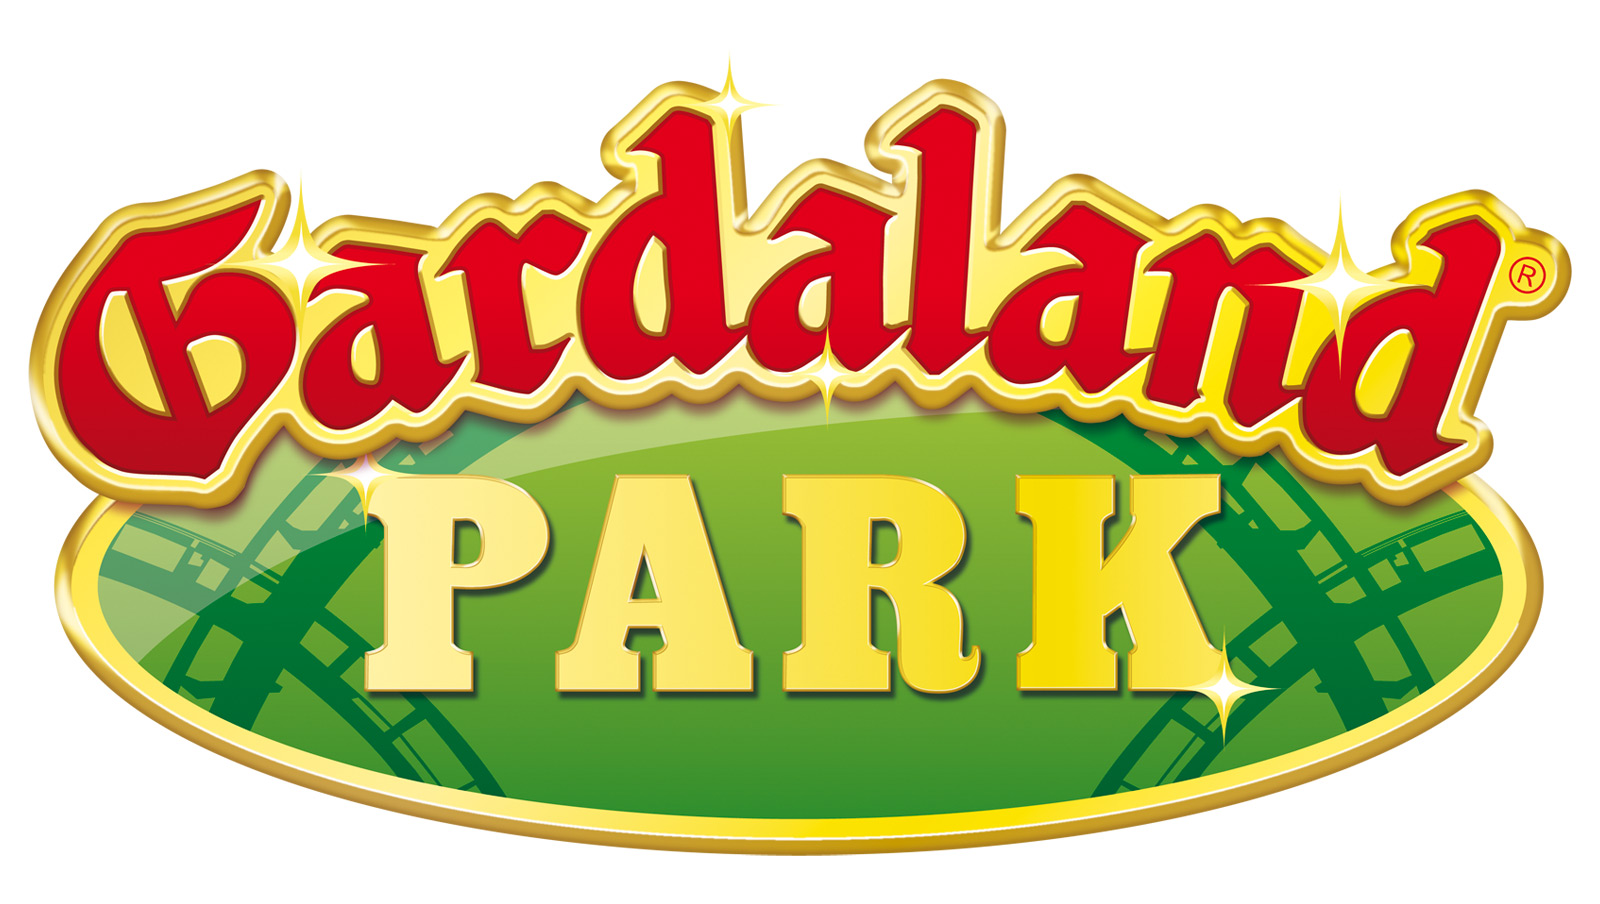 Gardaland Park